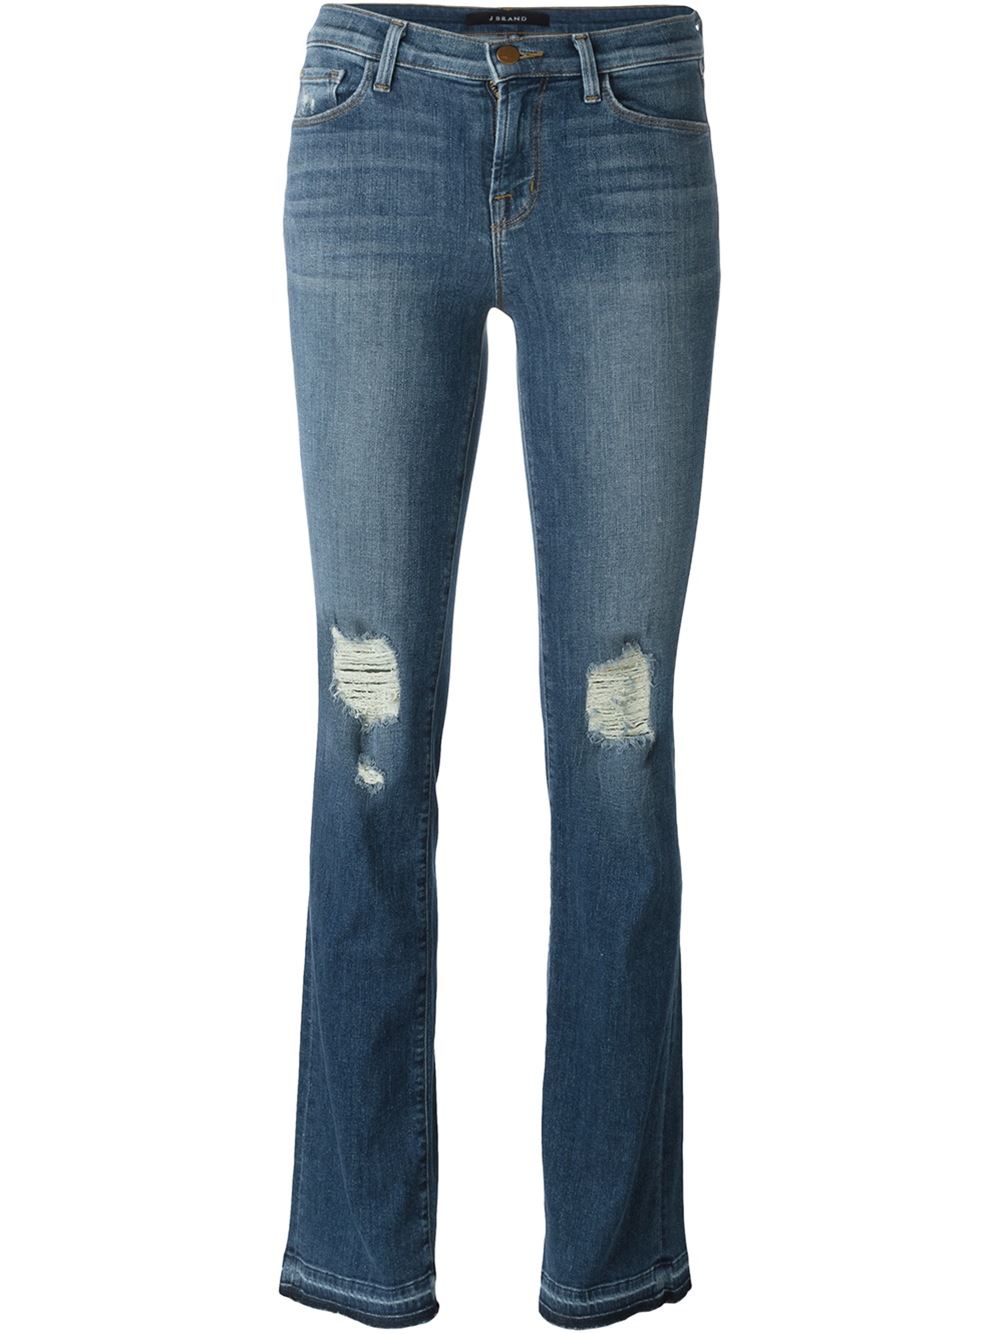 J Brand Distressed Bootcut Jeans £306.00